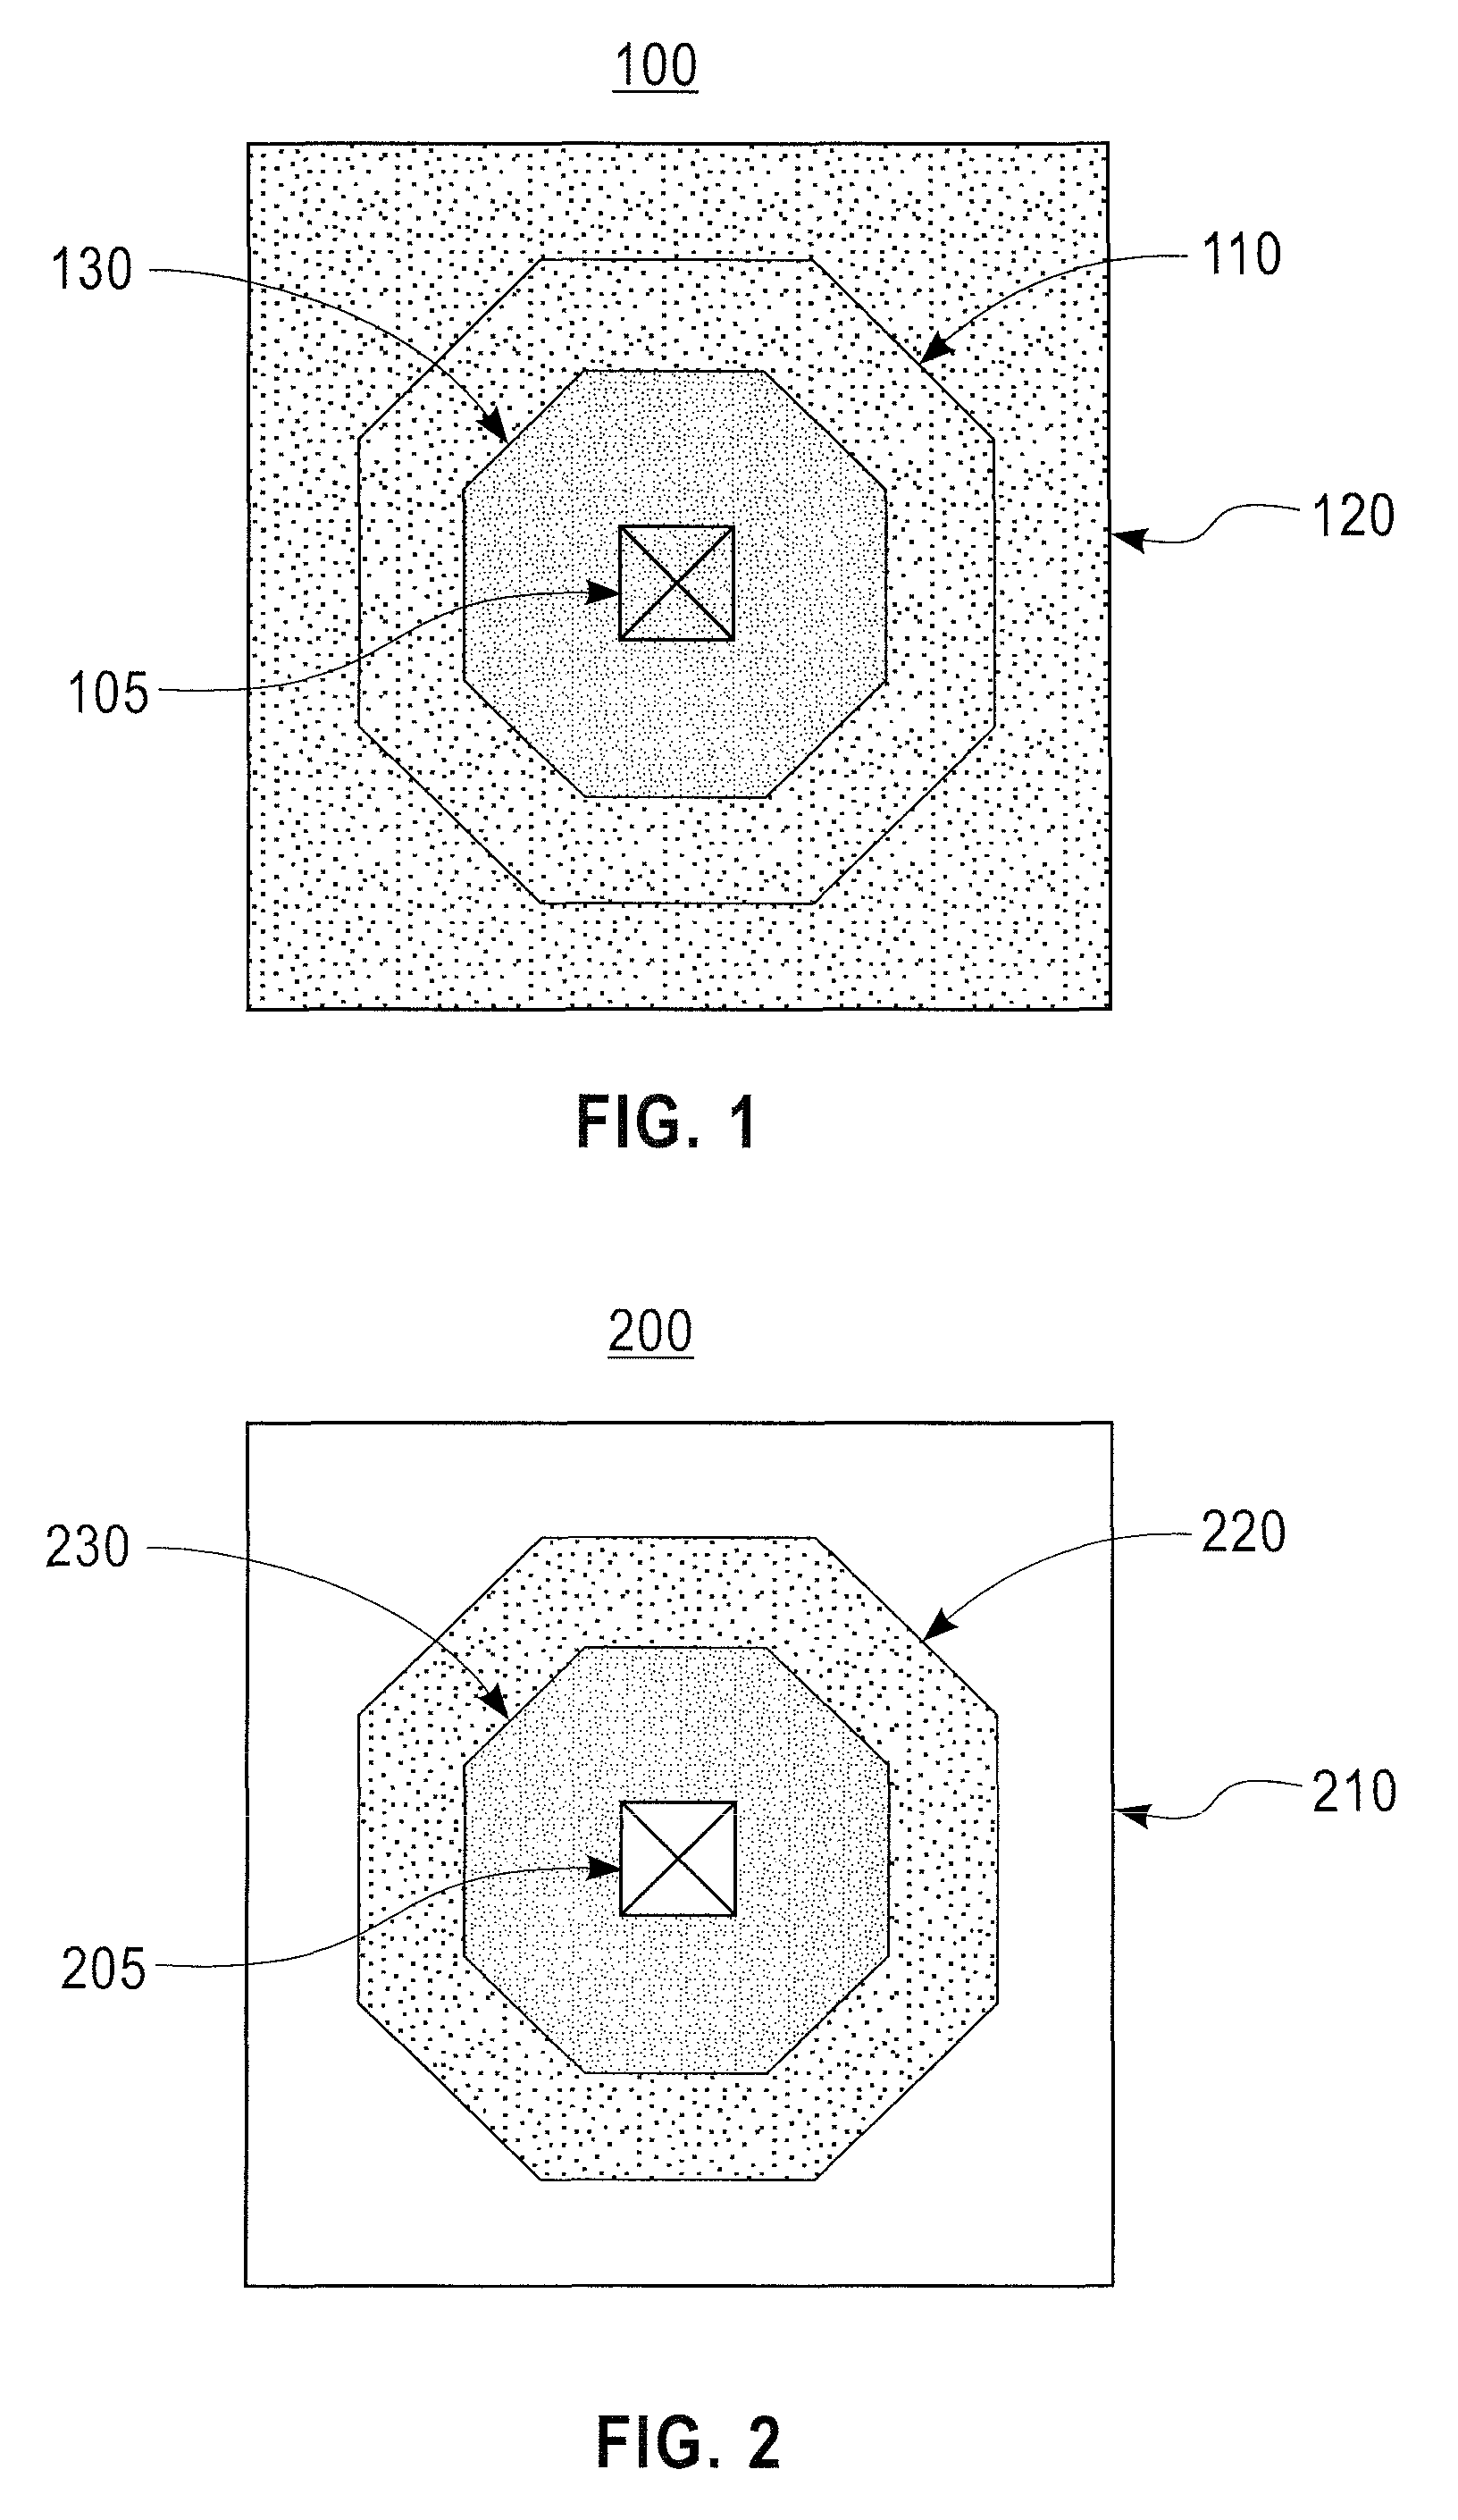 3D inter-stratum connectivity robustness